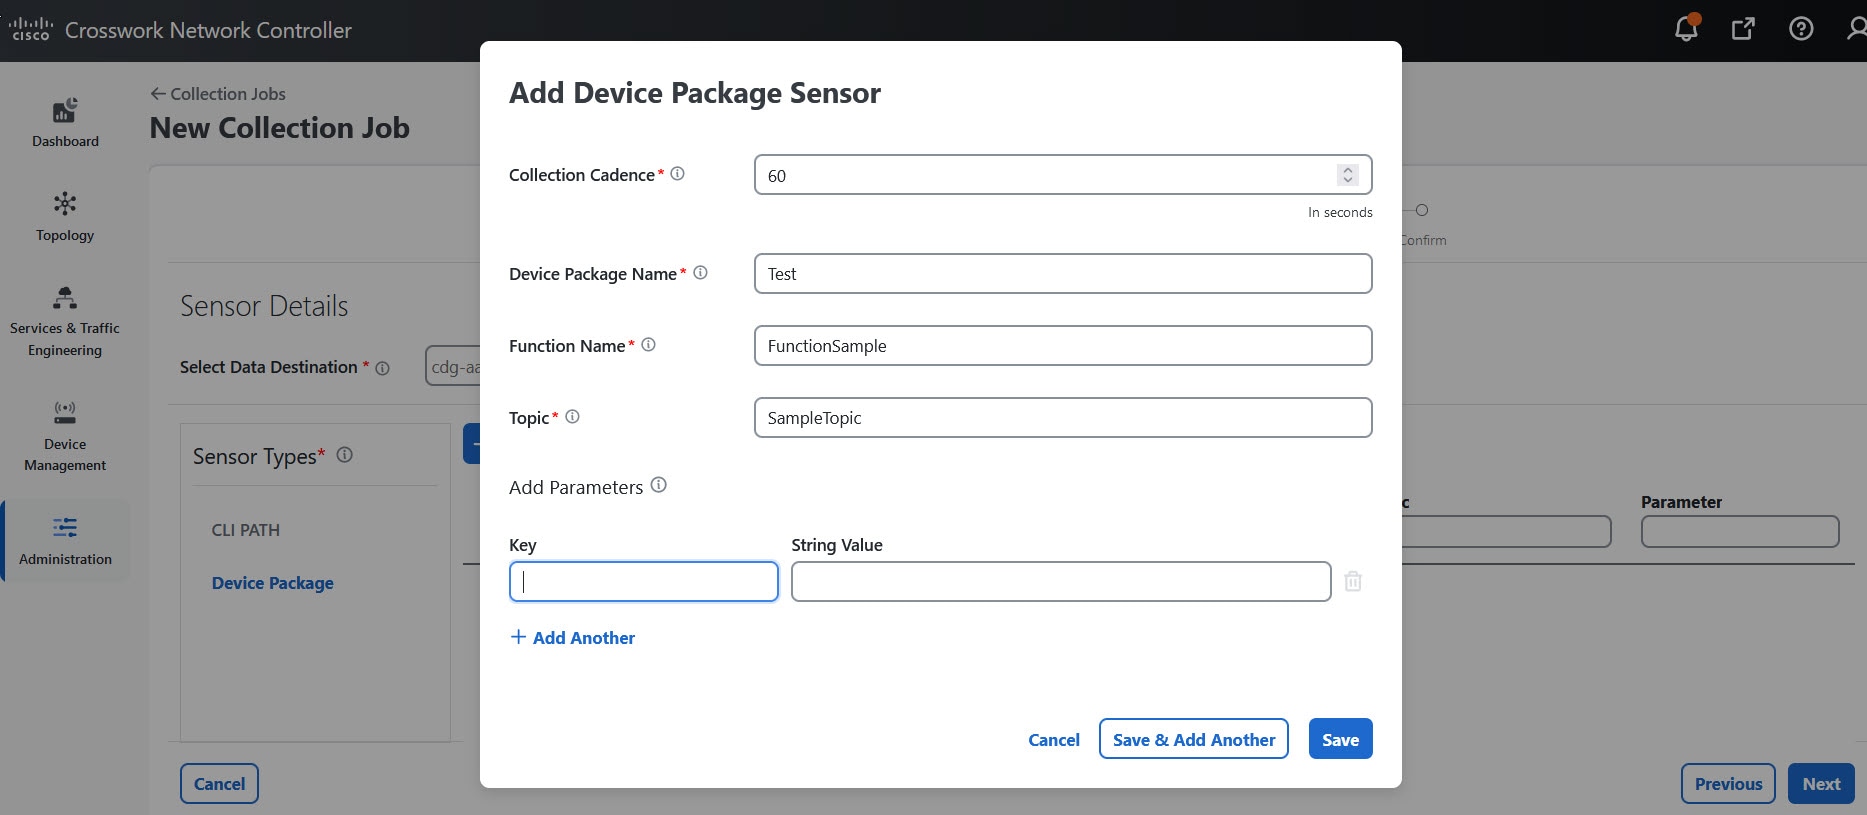 Add Device Package Sensor Dialog Box